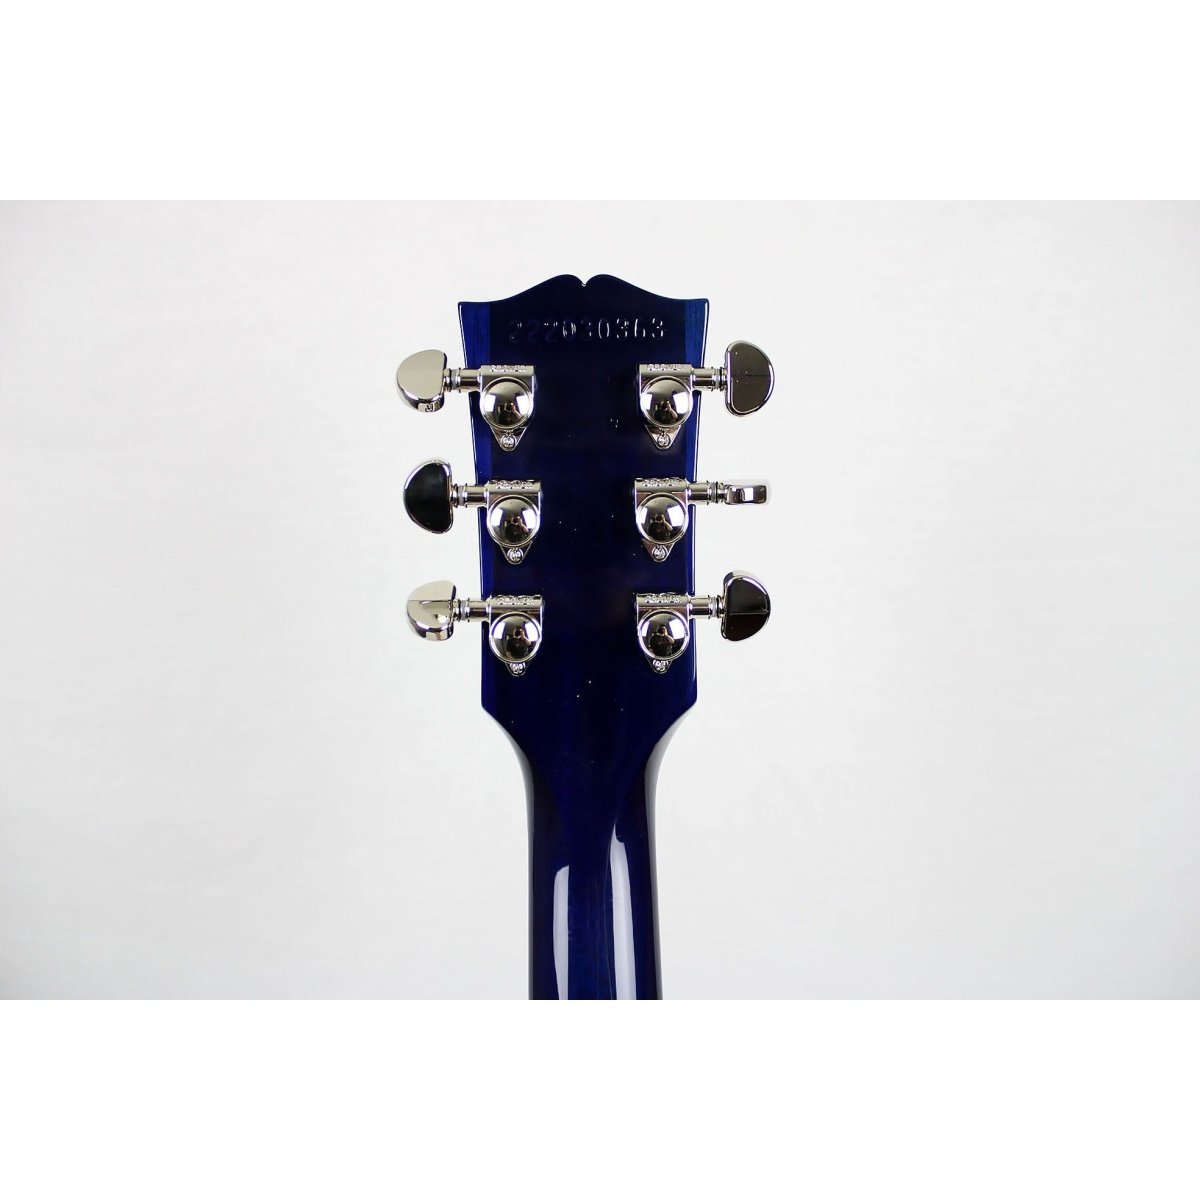 Gibson Les Paul Standard '60s Figured Top - Blueberry Burst - Leitz Music-711106139159-LPS600B9NH1